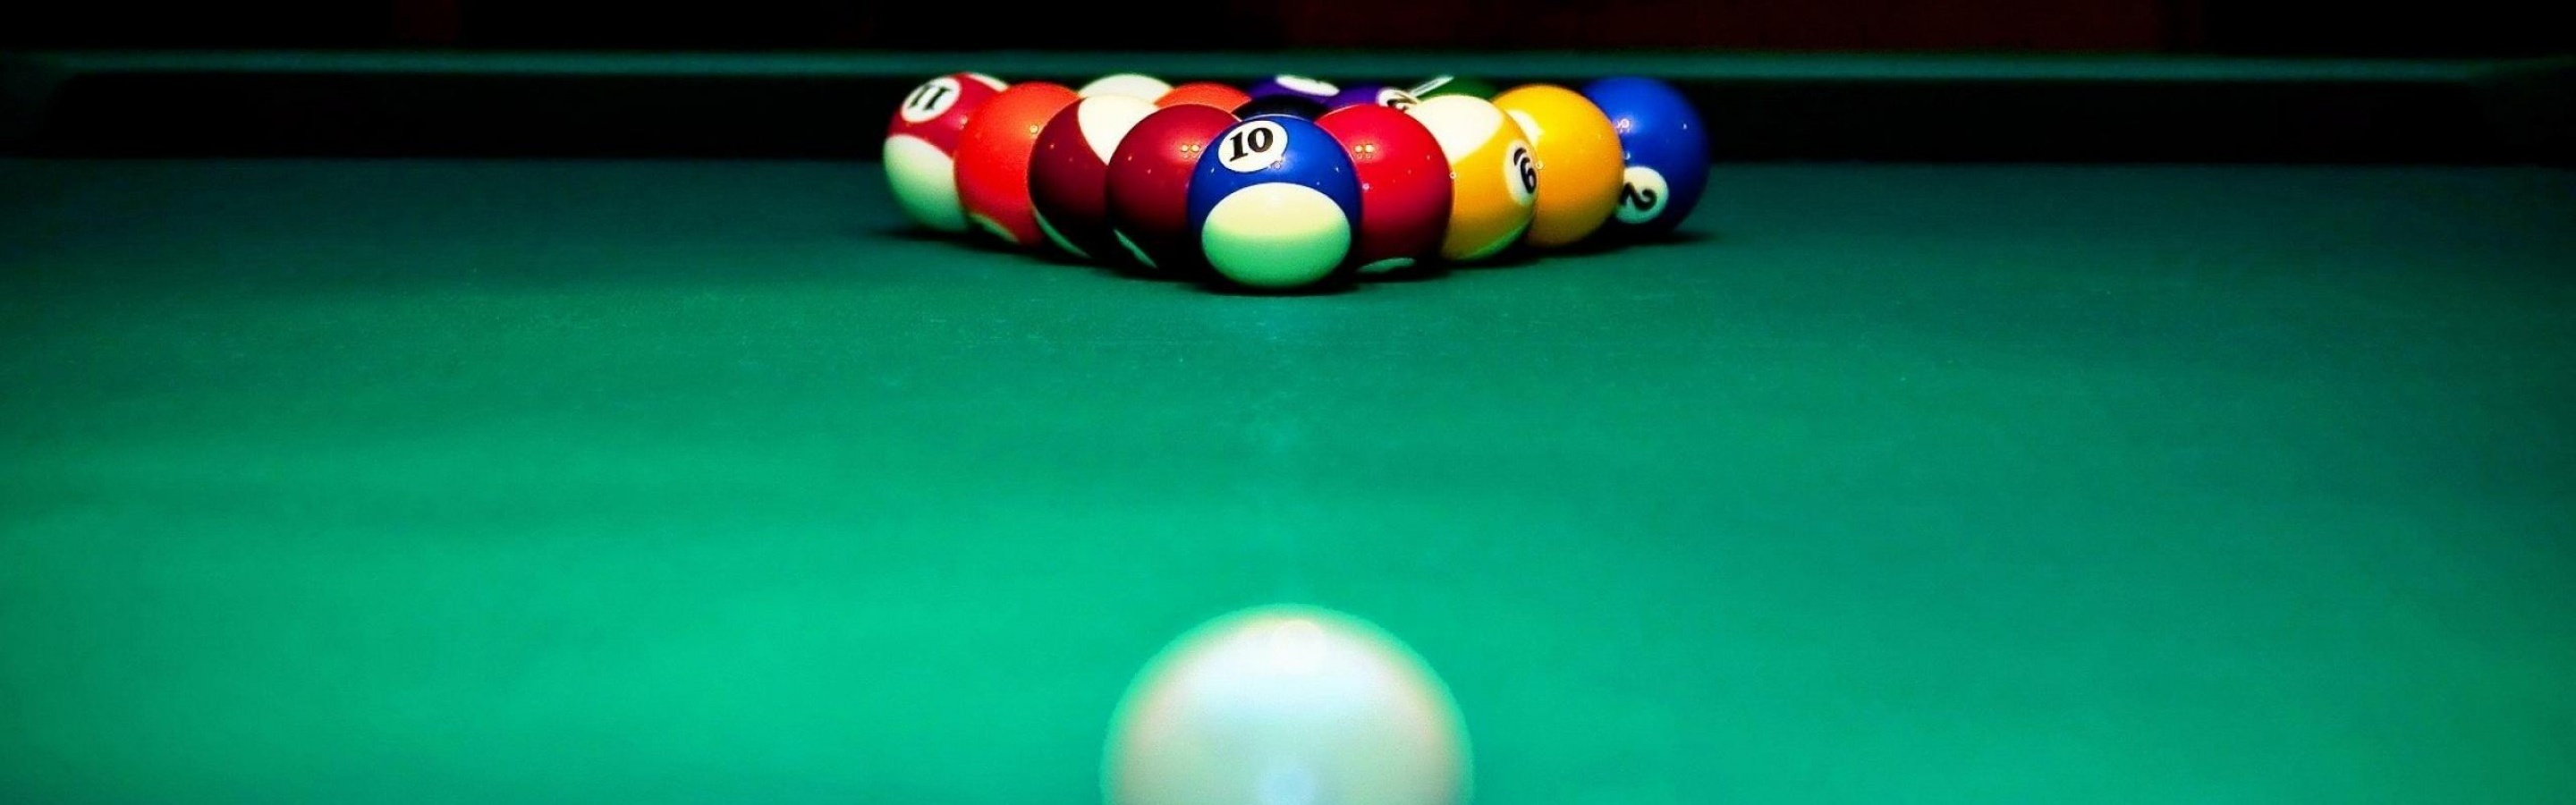 Billiard Table And Balls